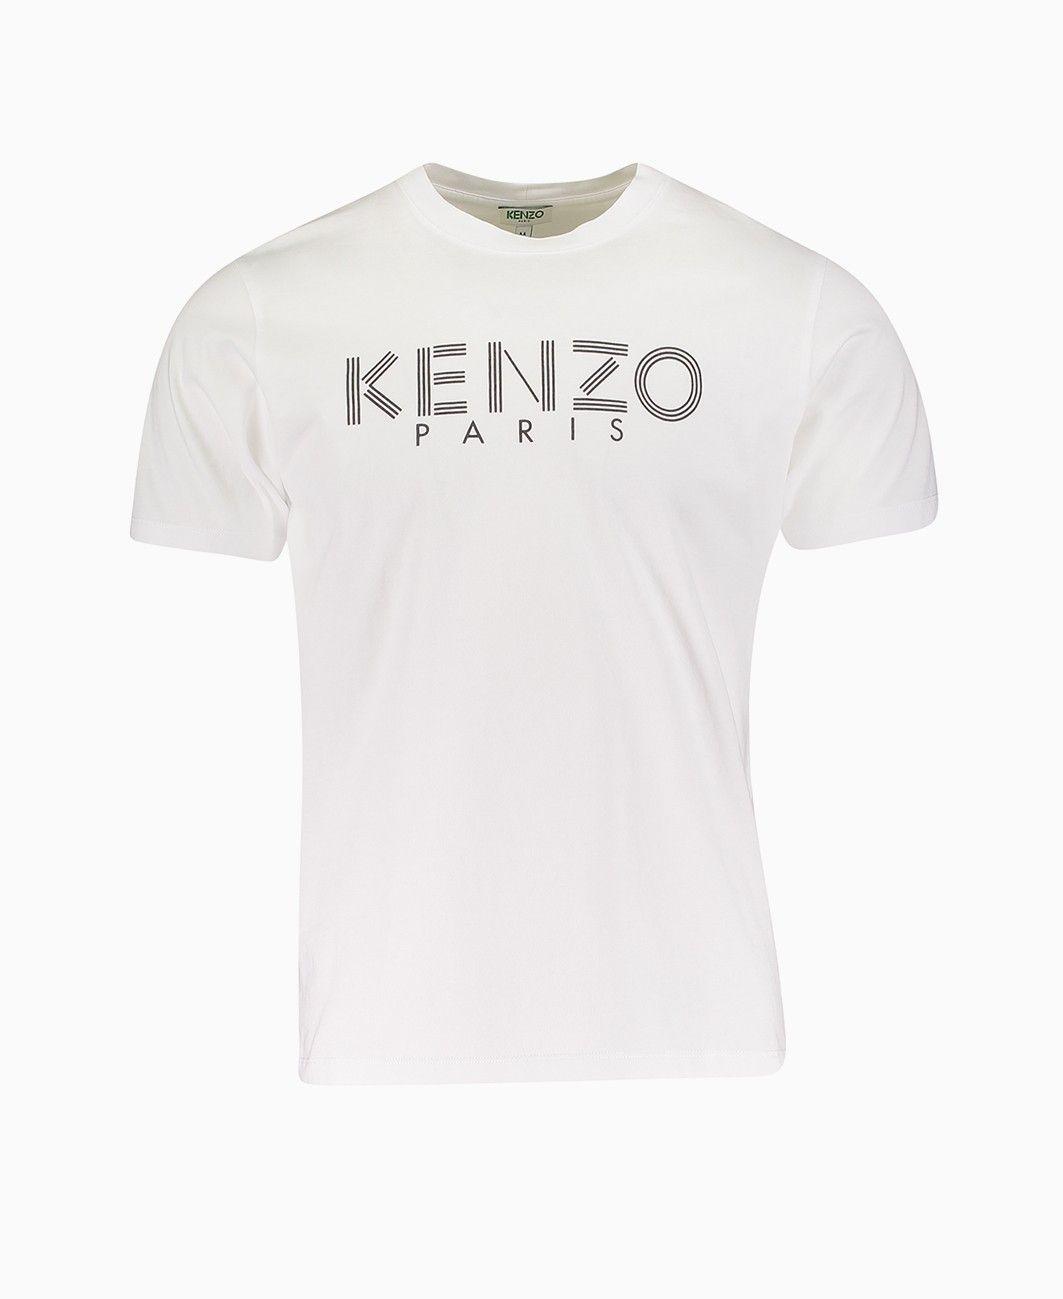 Kenzo Paris Logo - Kenzo - Paris Logo Print T-Shirt - White